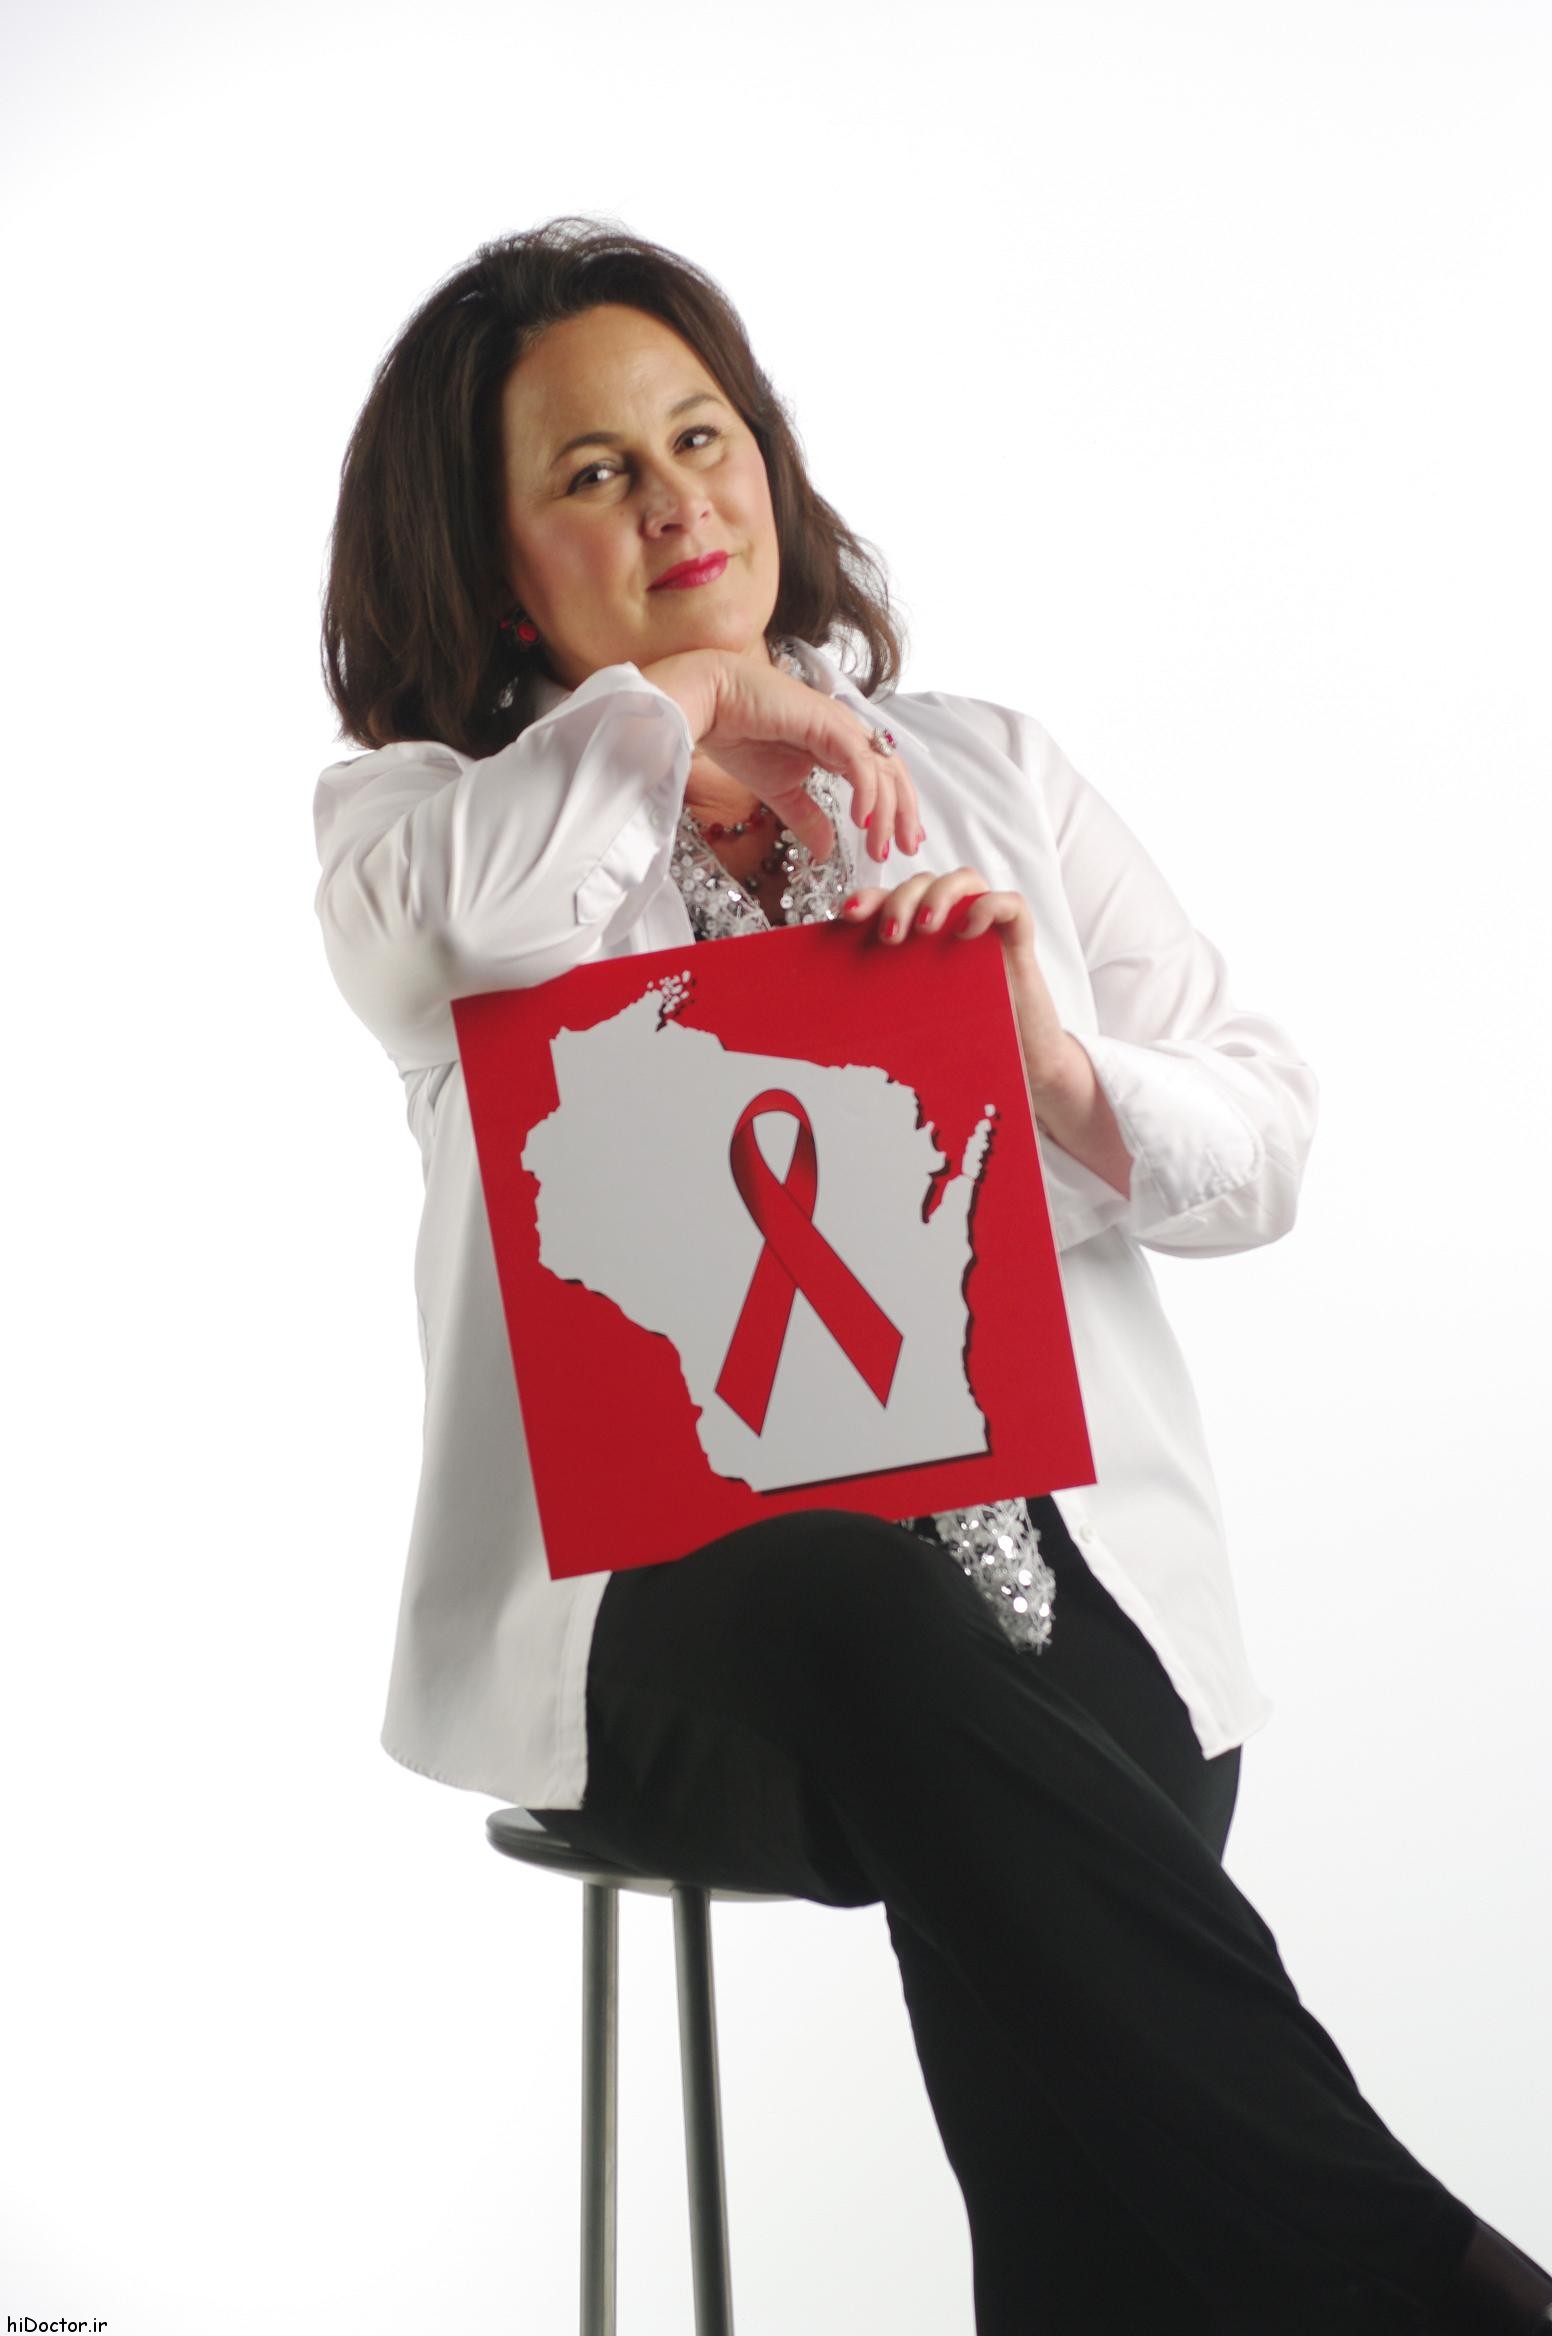 AIDS-HIV-photos (33)